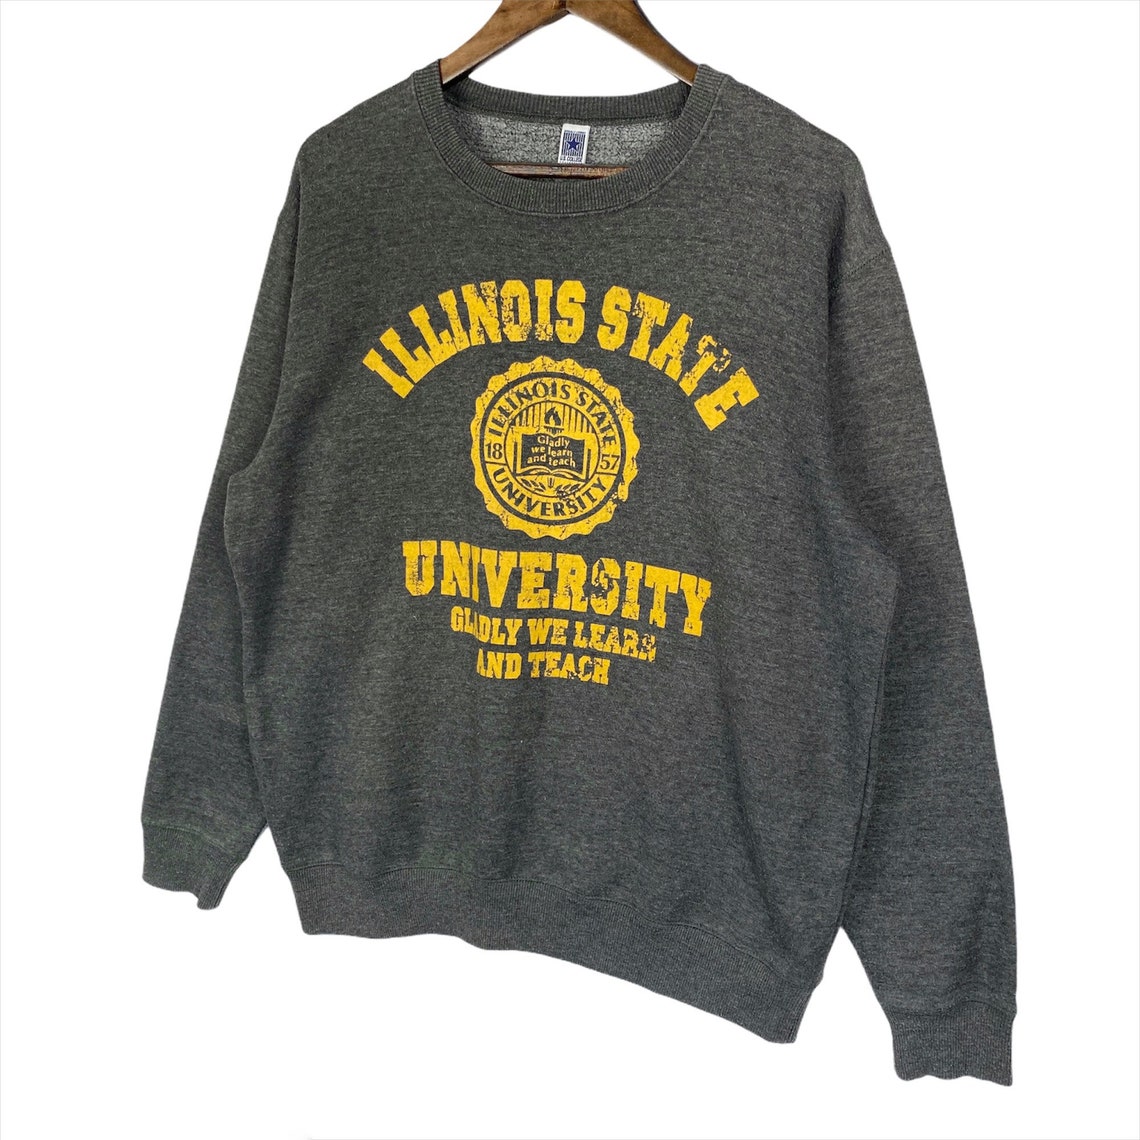 Vintage 2000s Illinois State University Sweatshirt Crewneck | Etsy